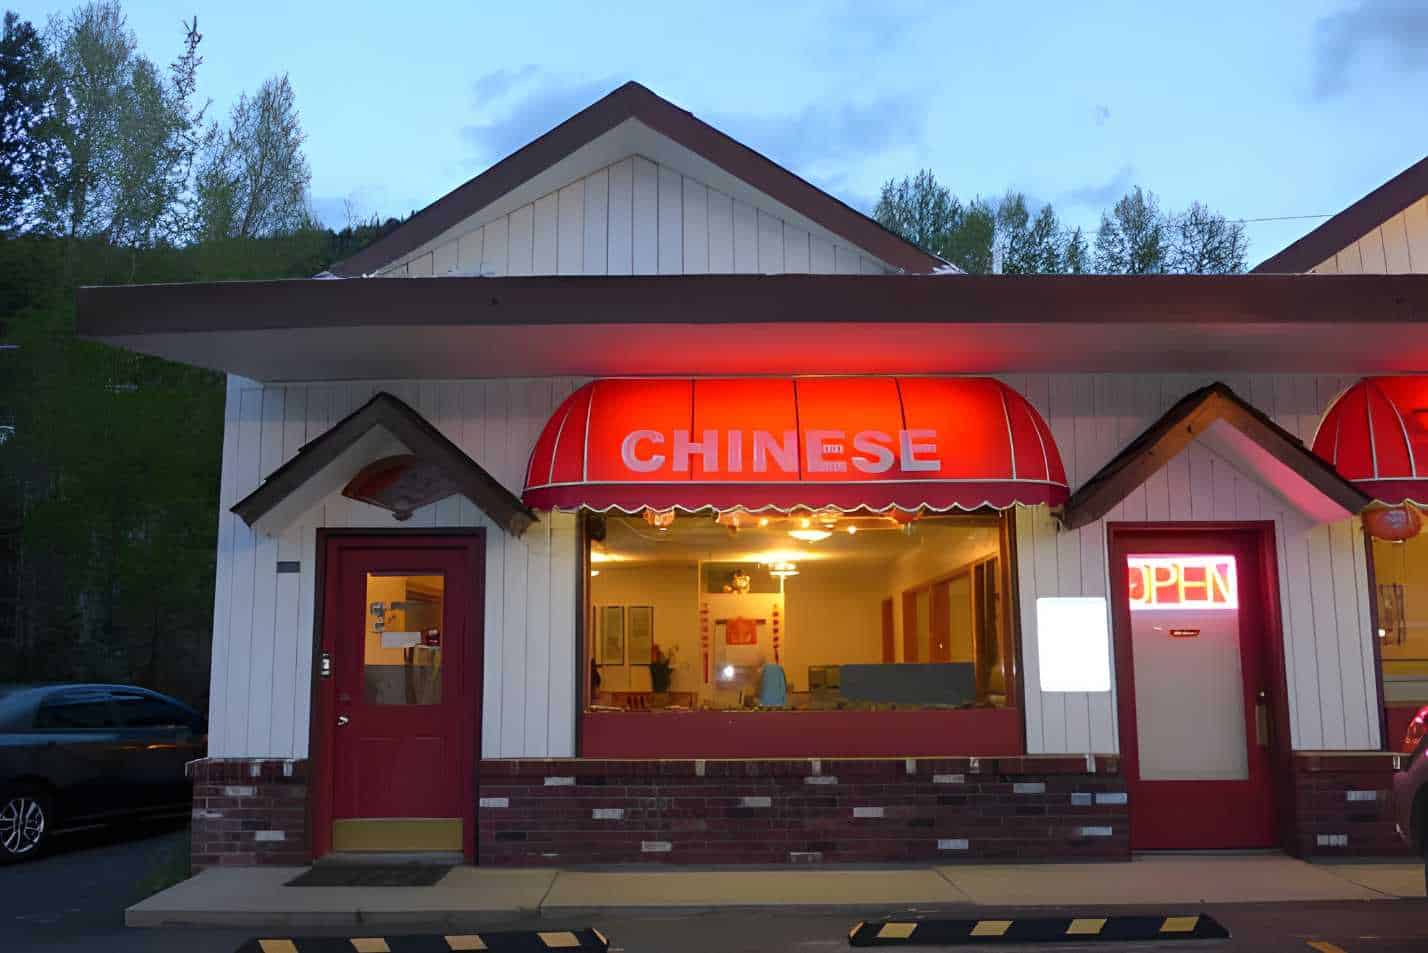 China Garden Asian Grill Best Restaurants in Estes Park, CO